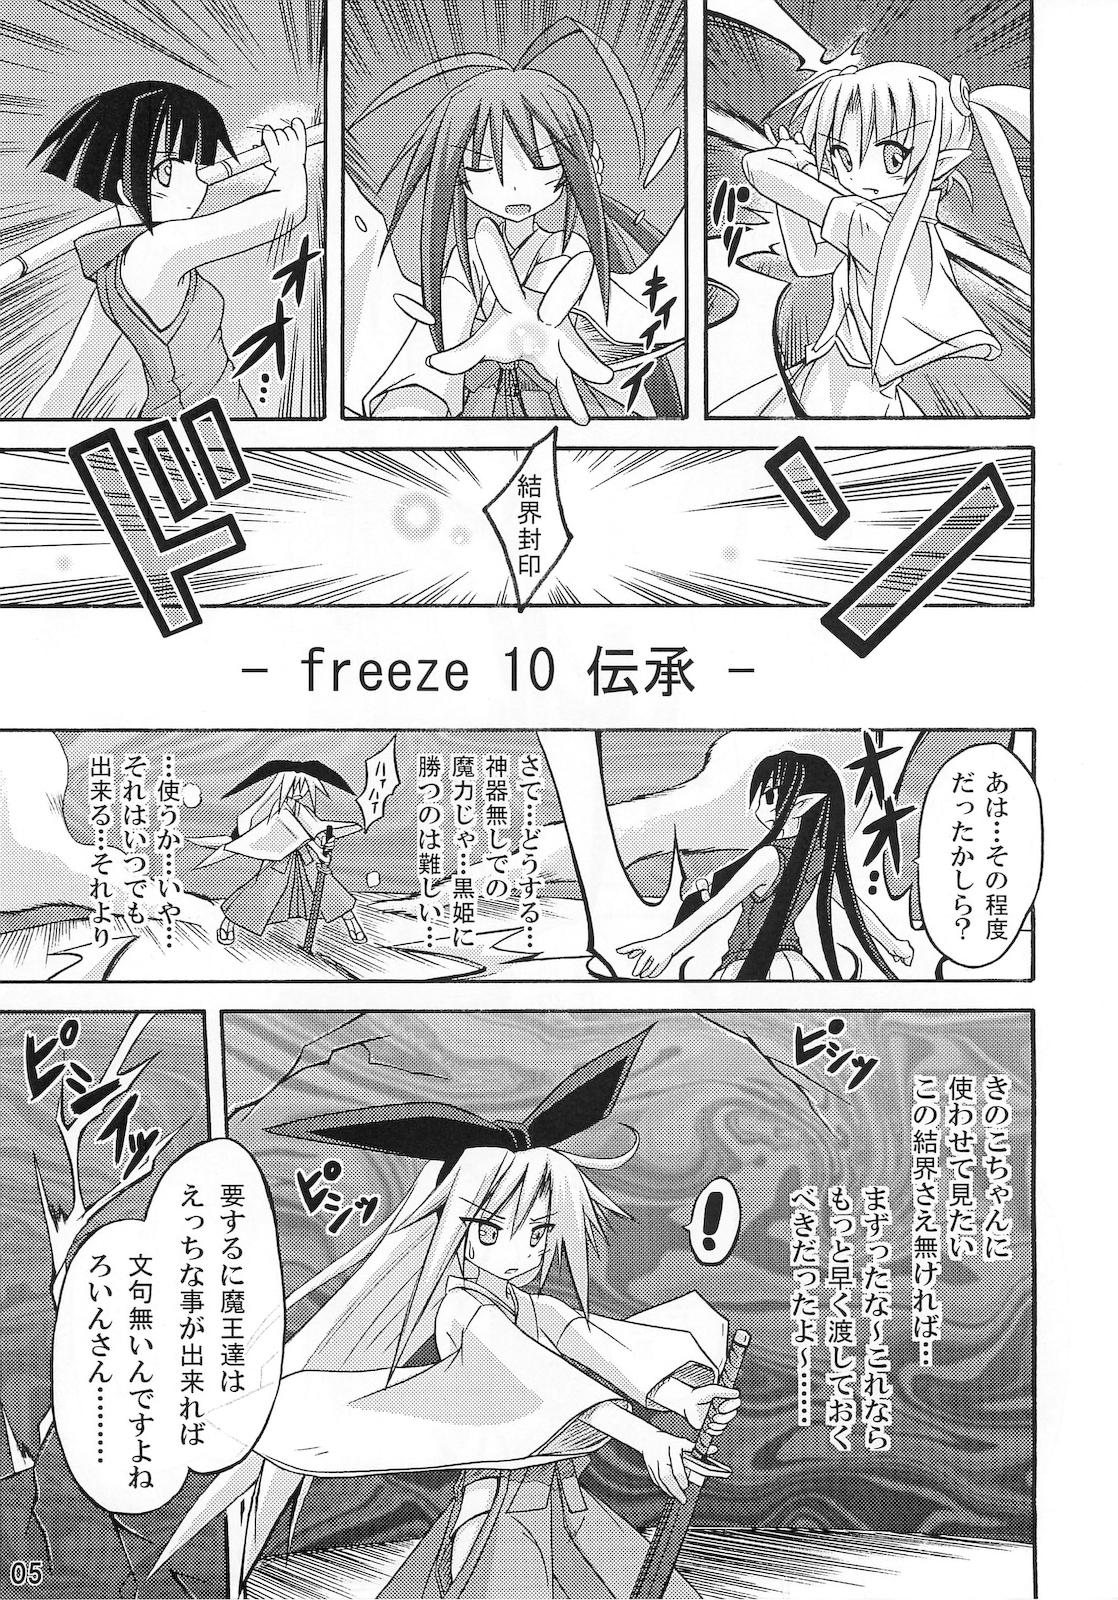 freeze 10 Denshou 4